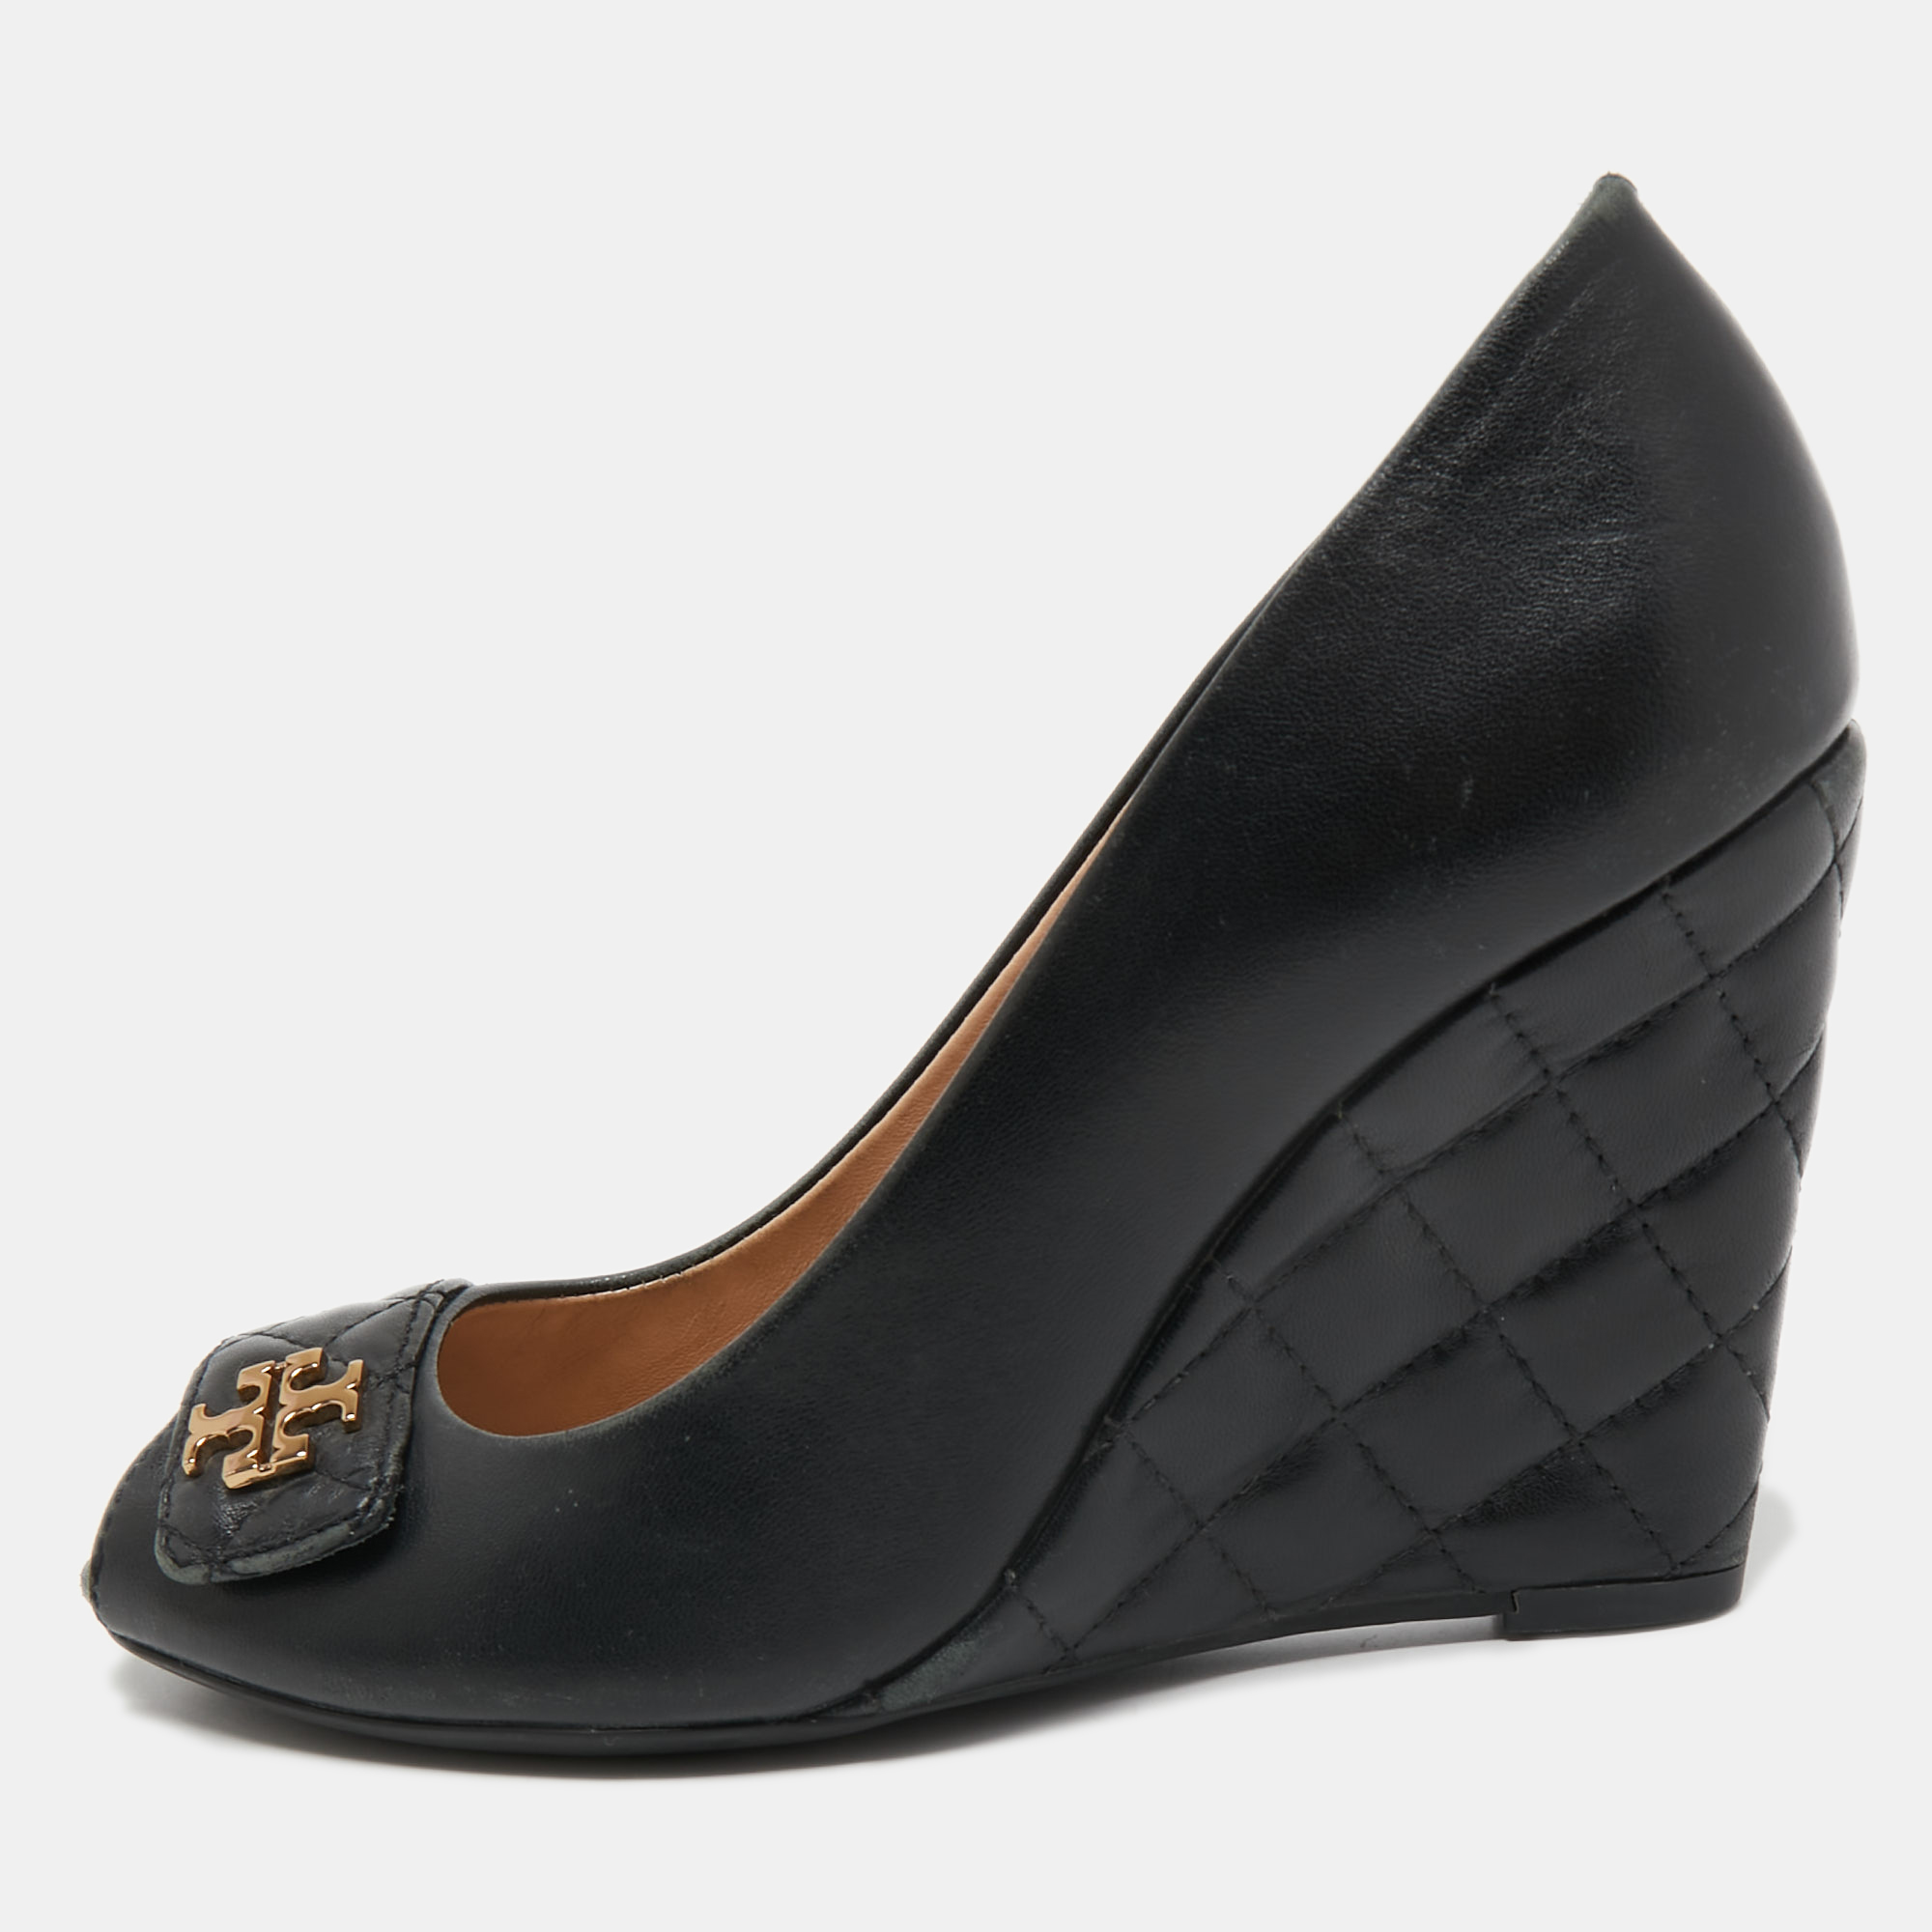 Tory Burch Black Leather Leila Peep Toe Wedge Pumps Size 38.5